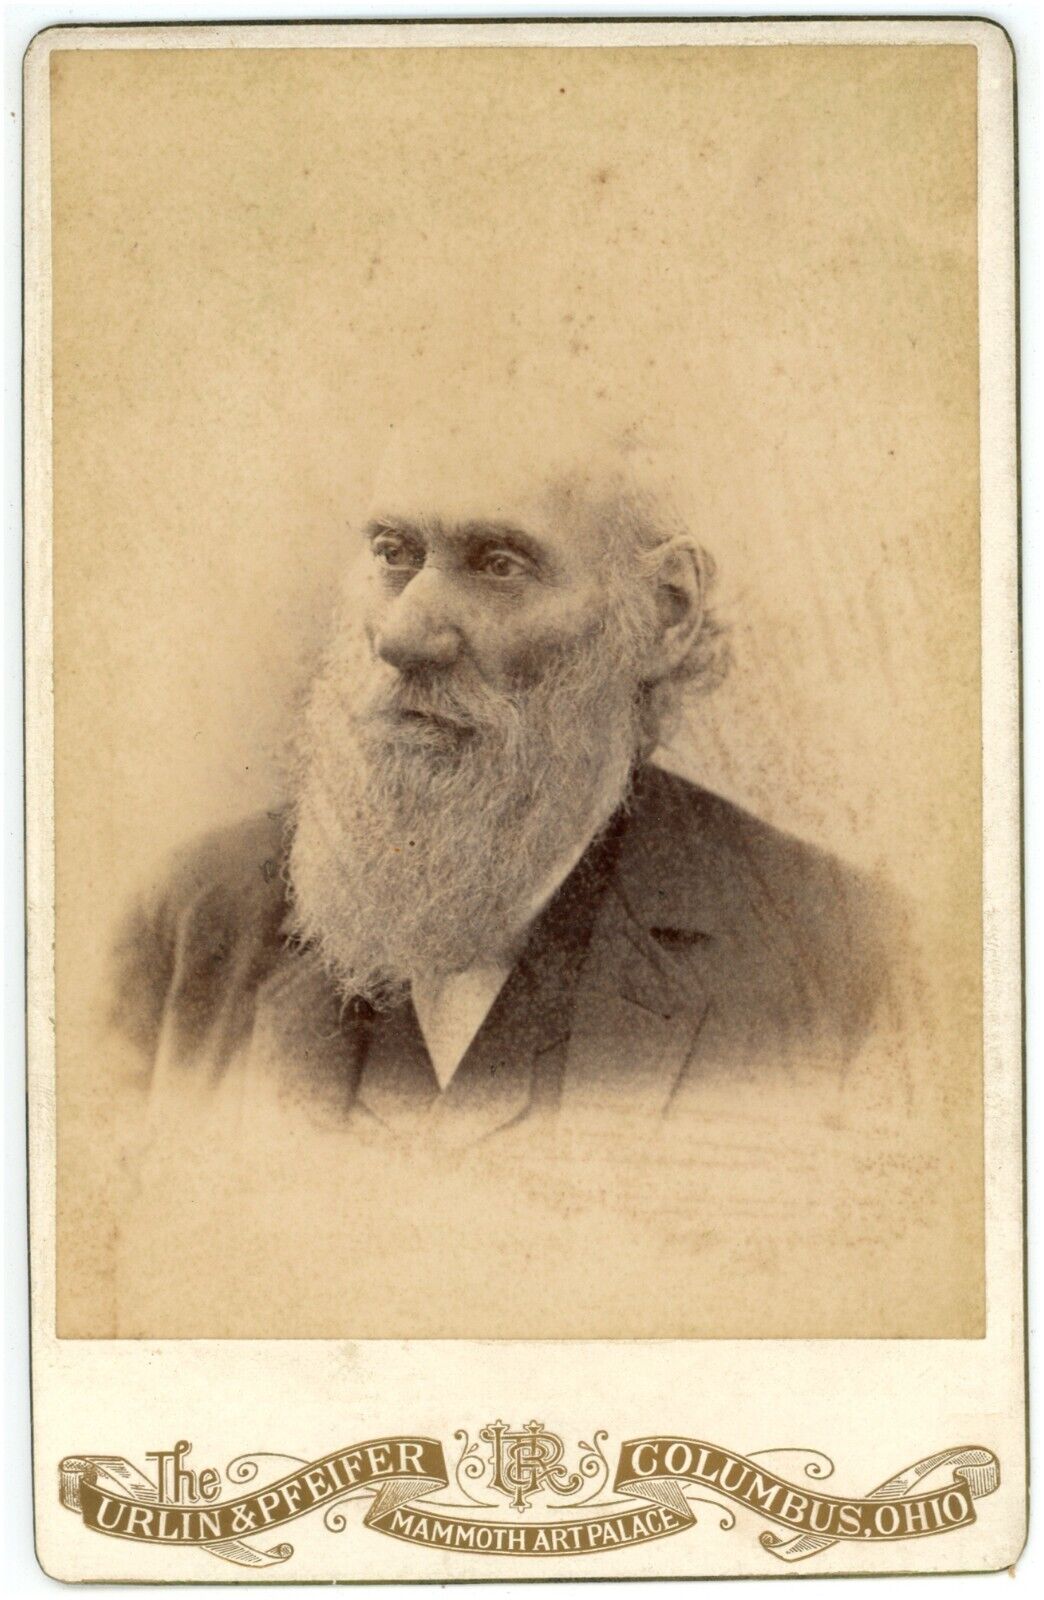 c1880s Cabinet Card Urlin & Pfeifer Stoic Older Man Full Beard Columbus, Ohio